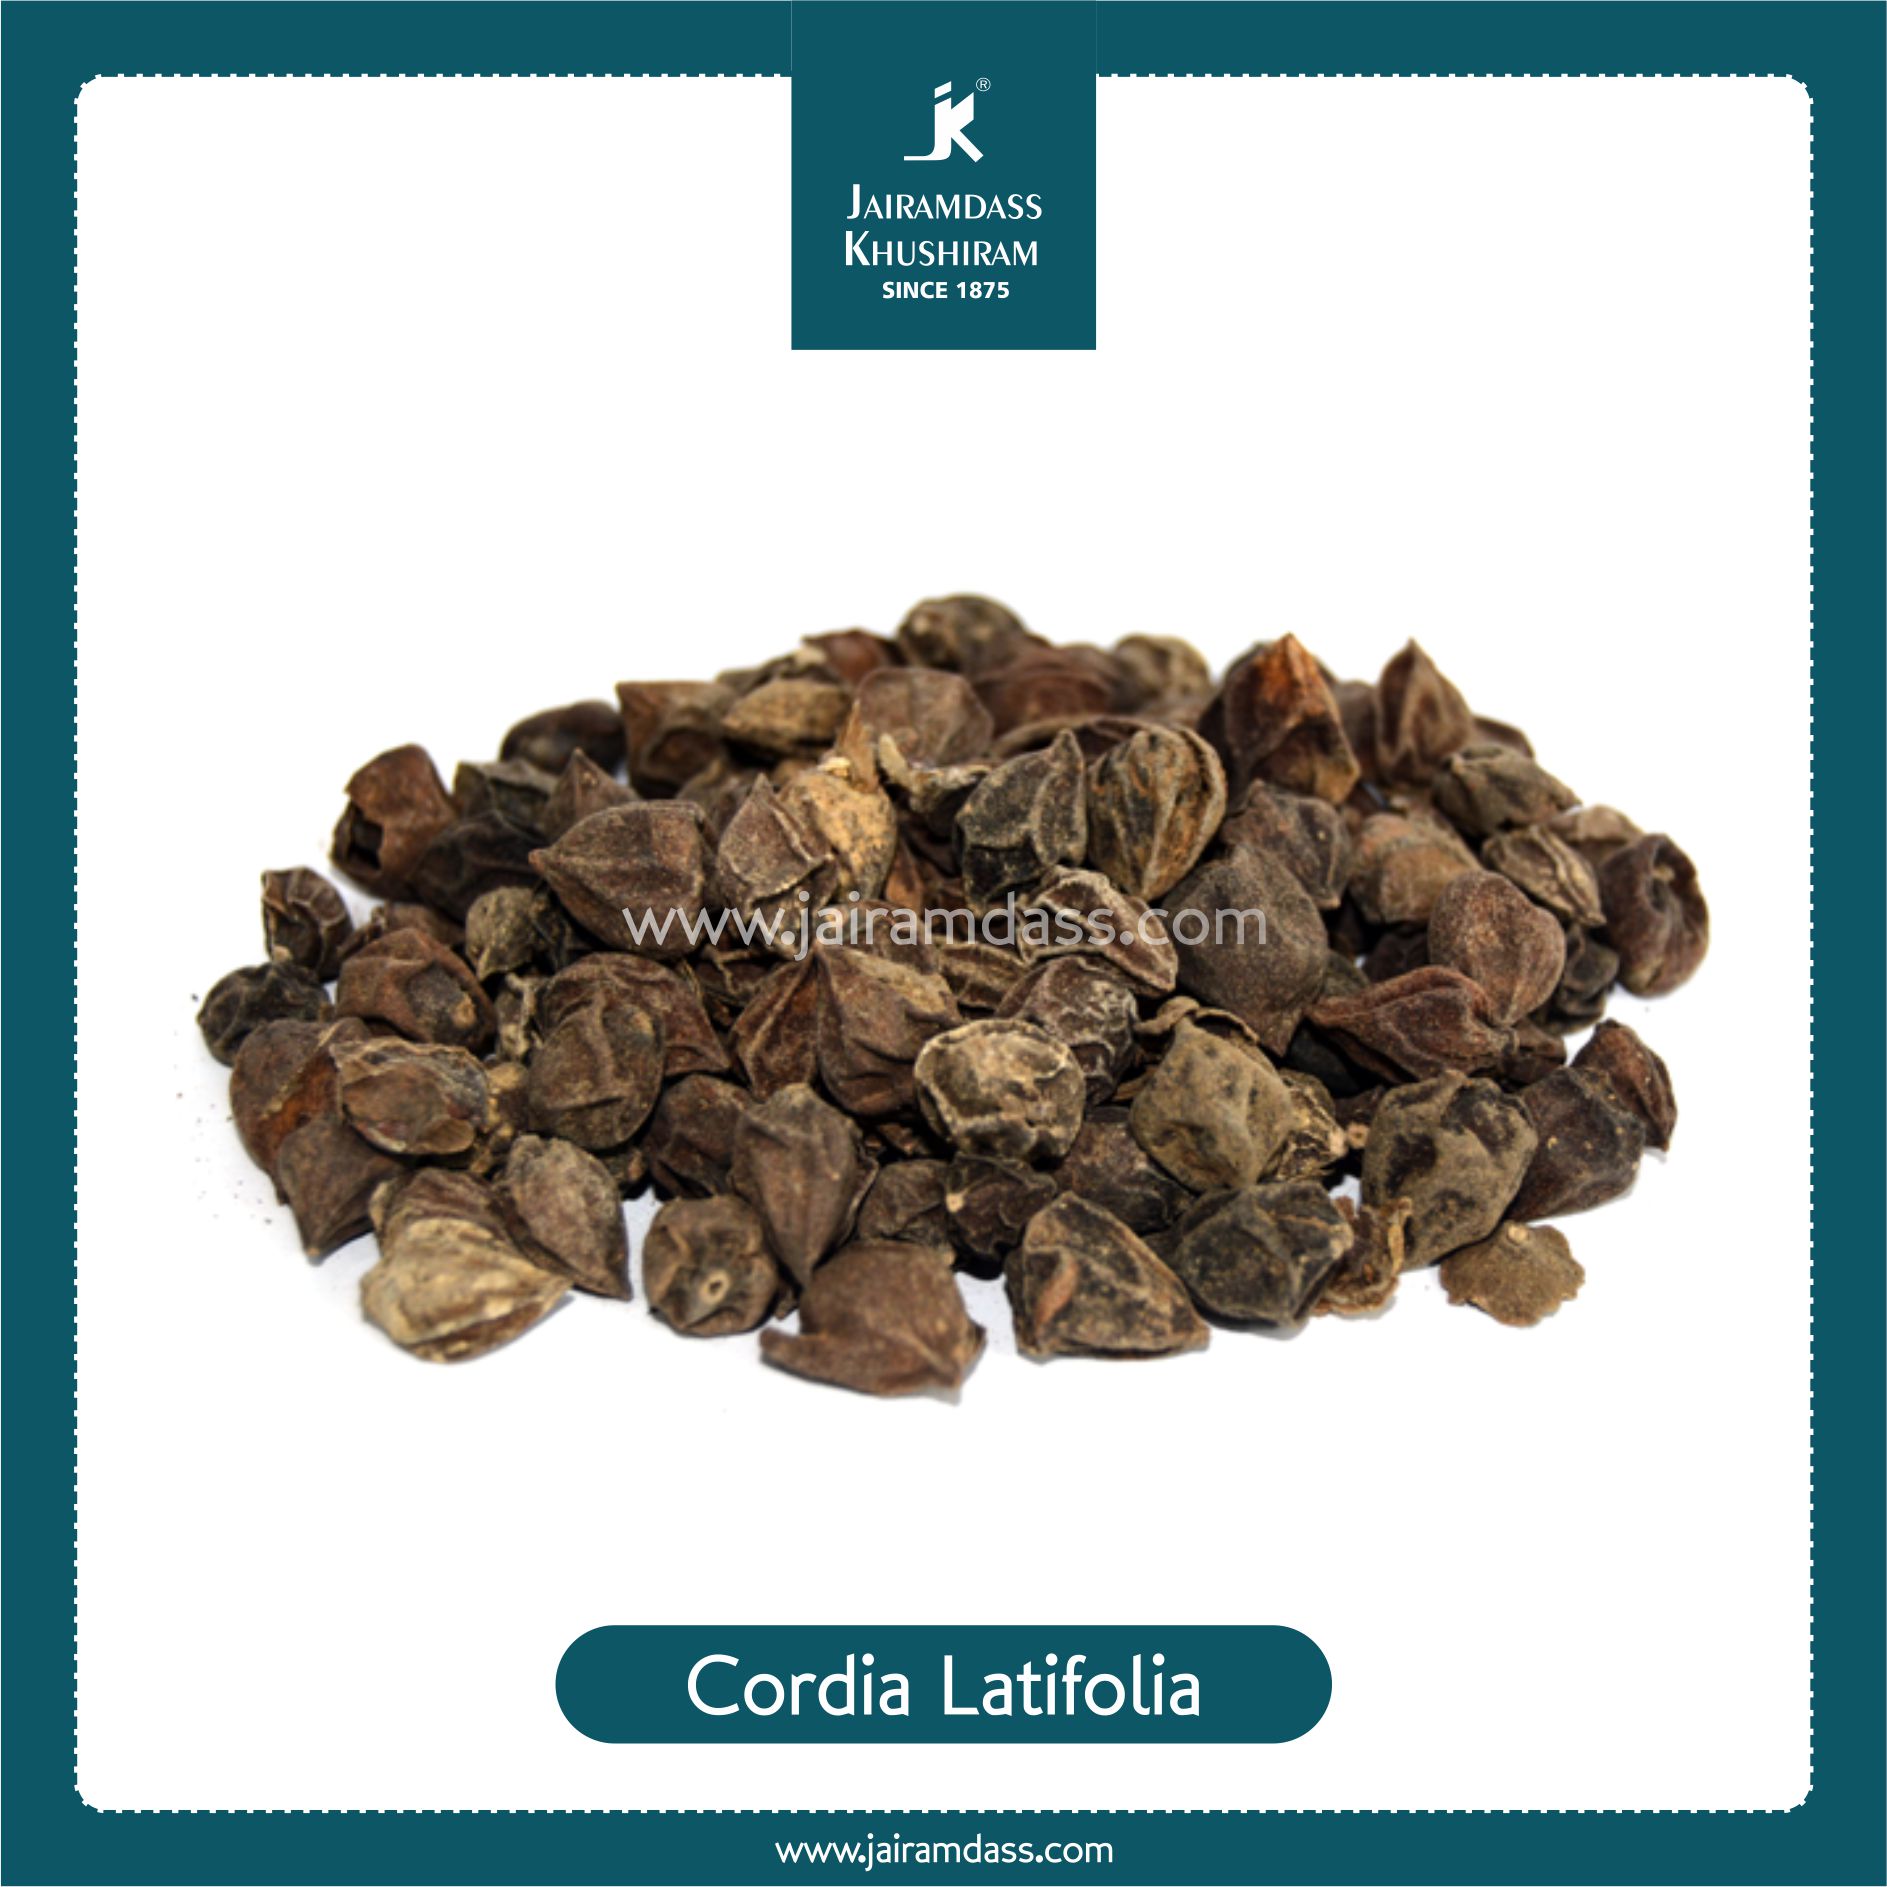 Cordia Lotifolia